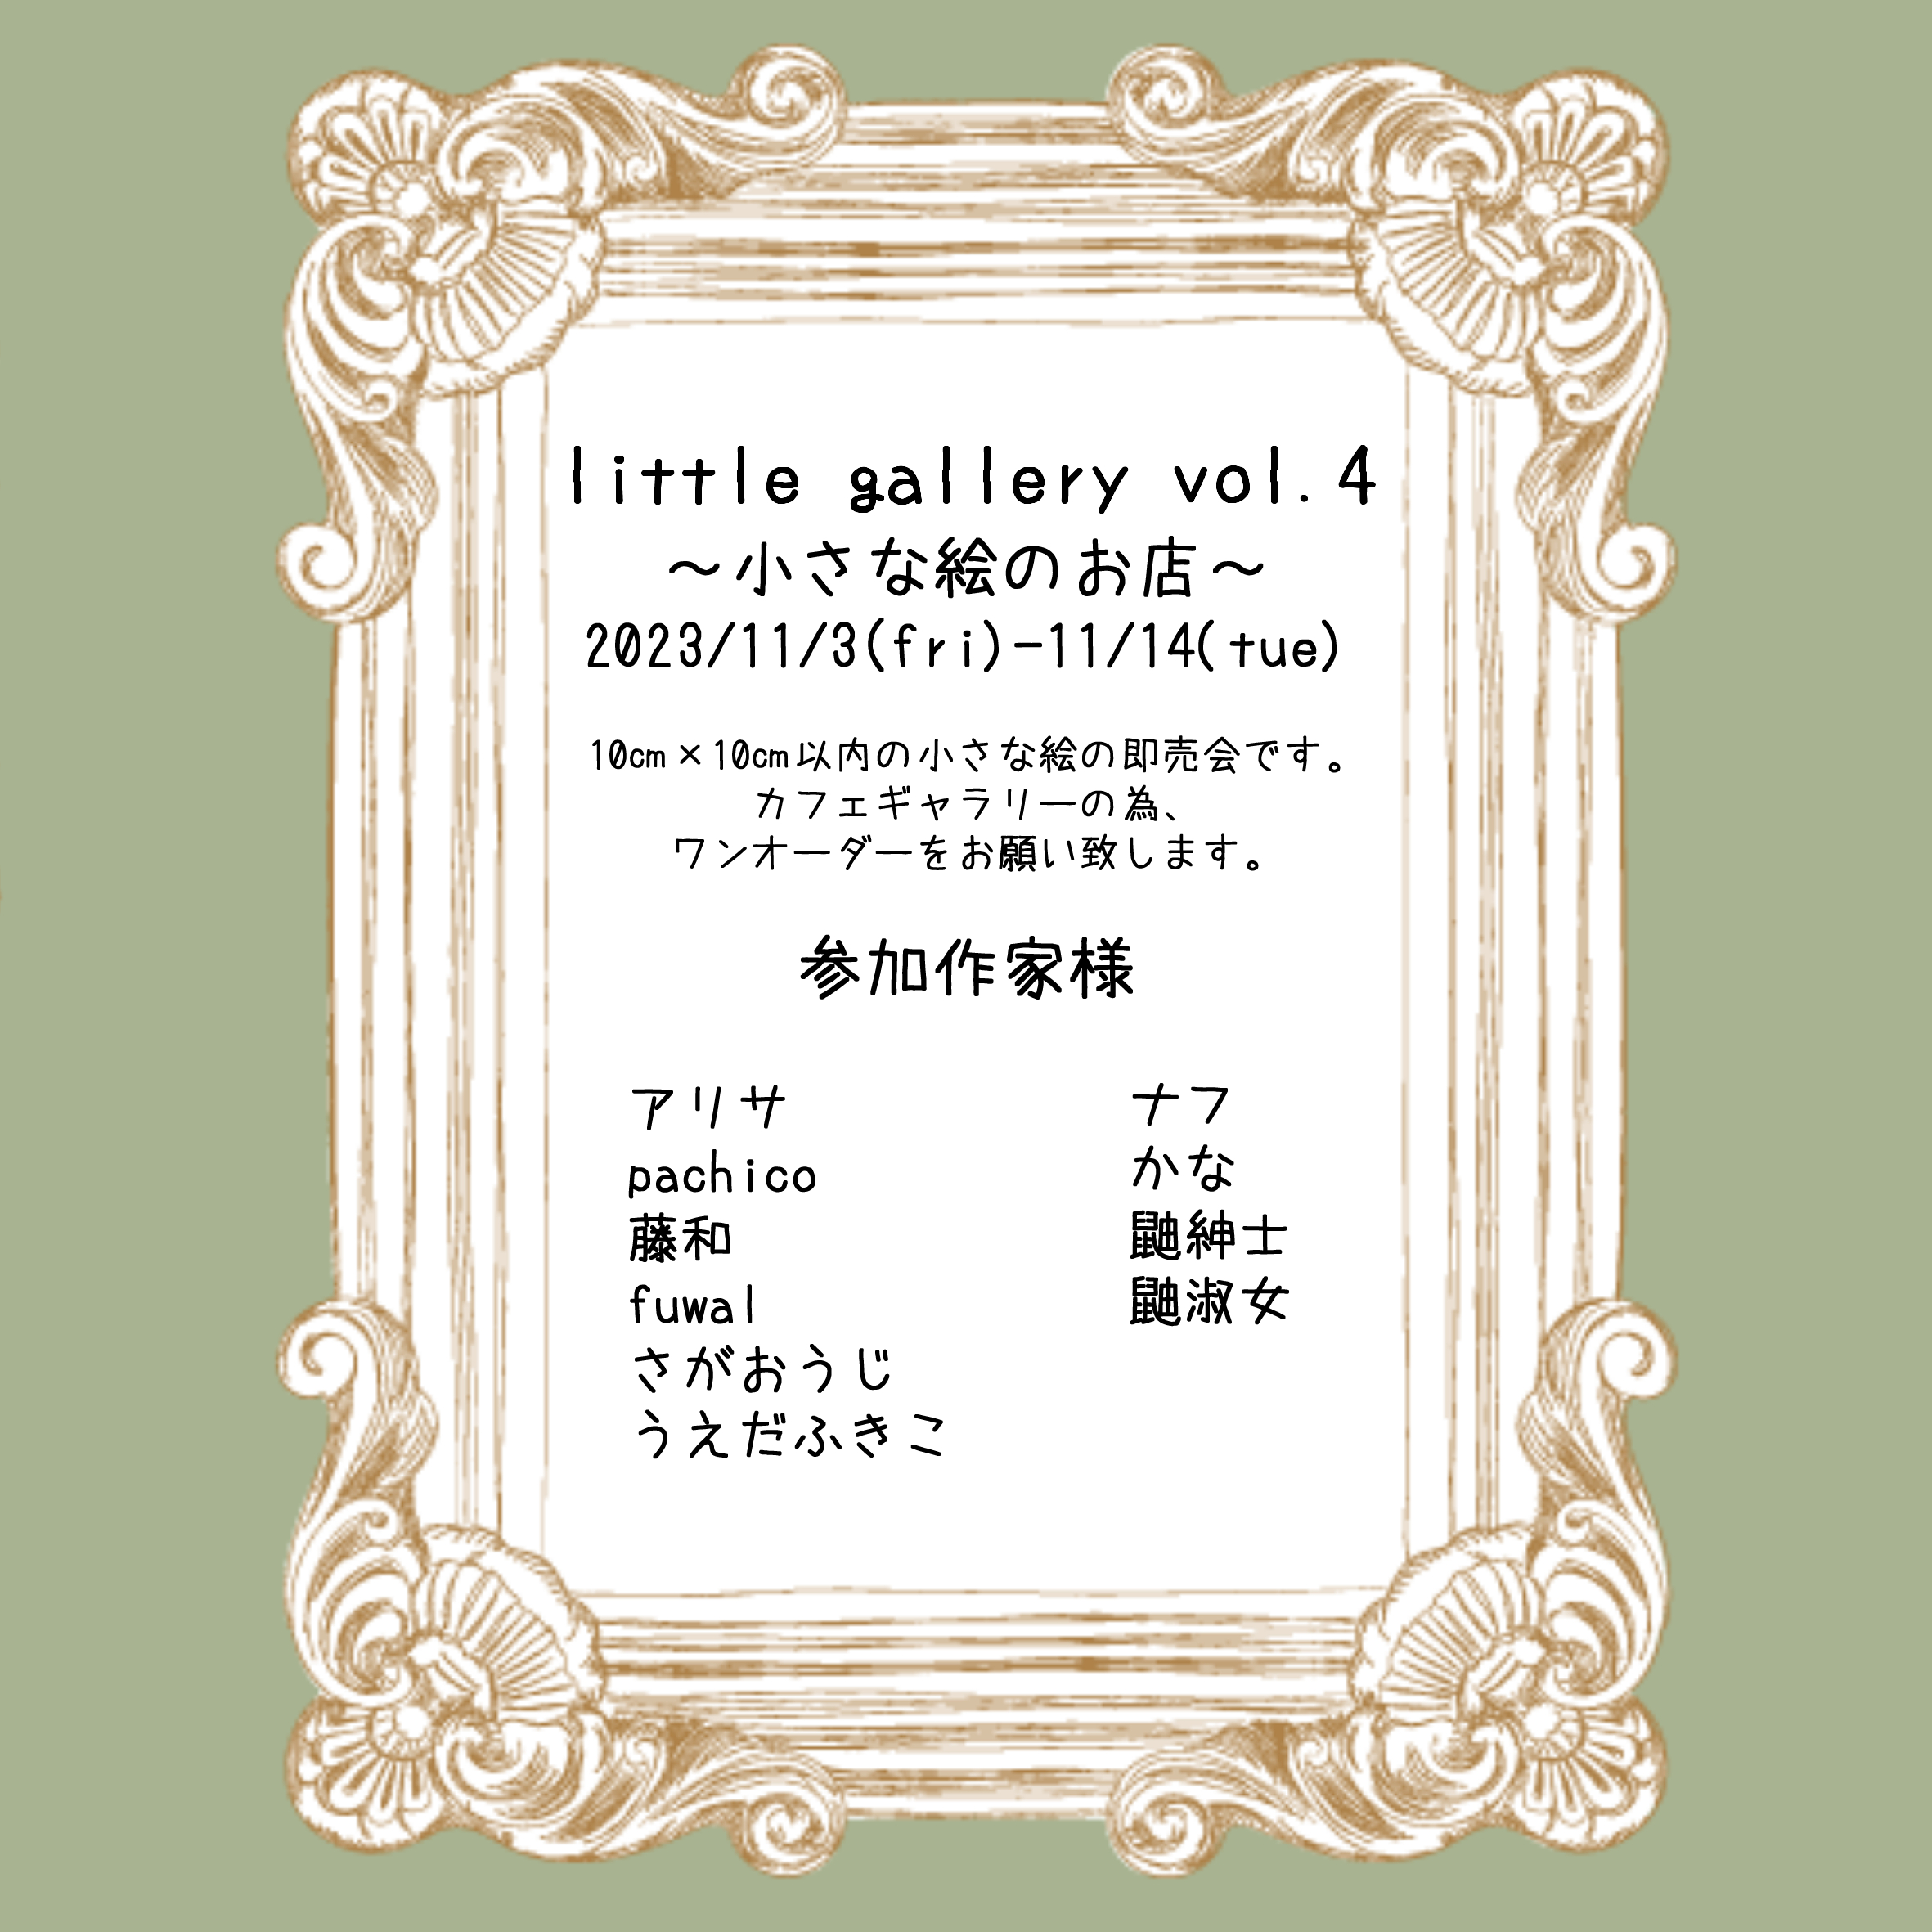 2023/11/3-11/14「little gallery vol.4~小さな絵のお店~」